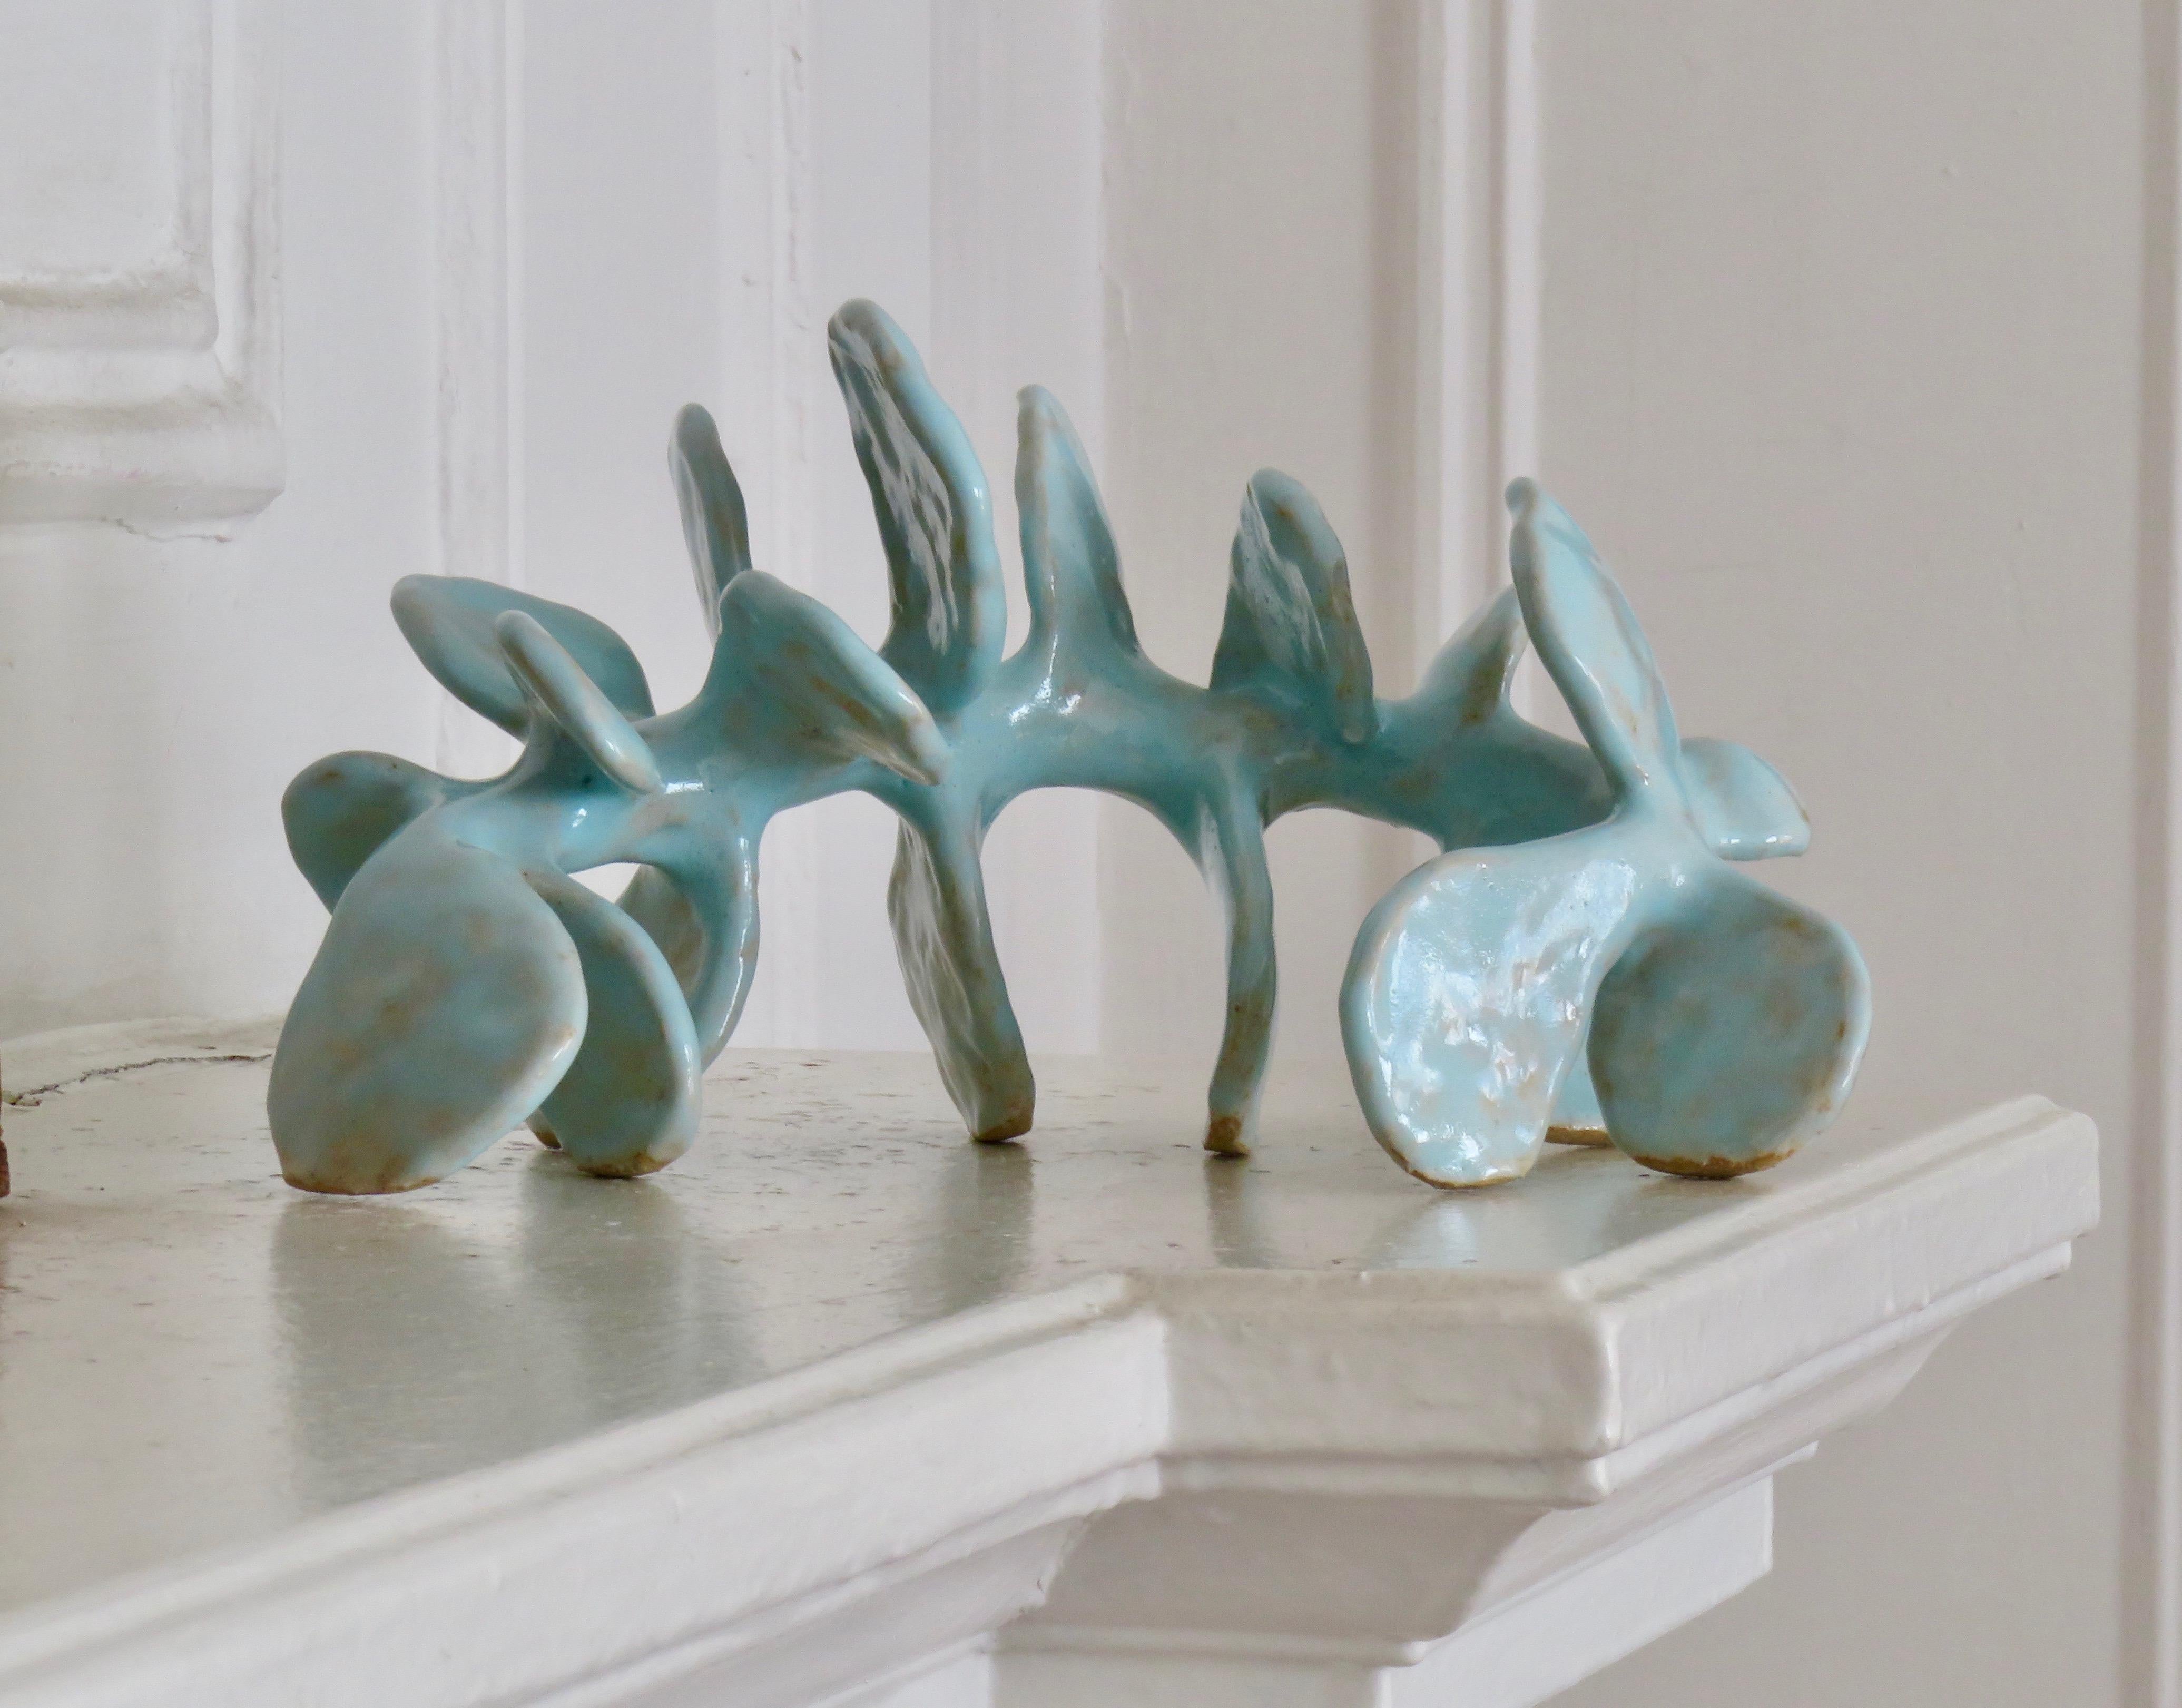 Contemporary Hand Built Ceramic Sculpture, a Skeletal Vertebral Form Glazed in Turquoise